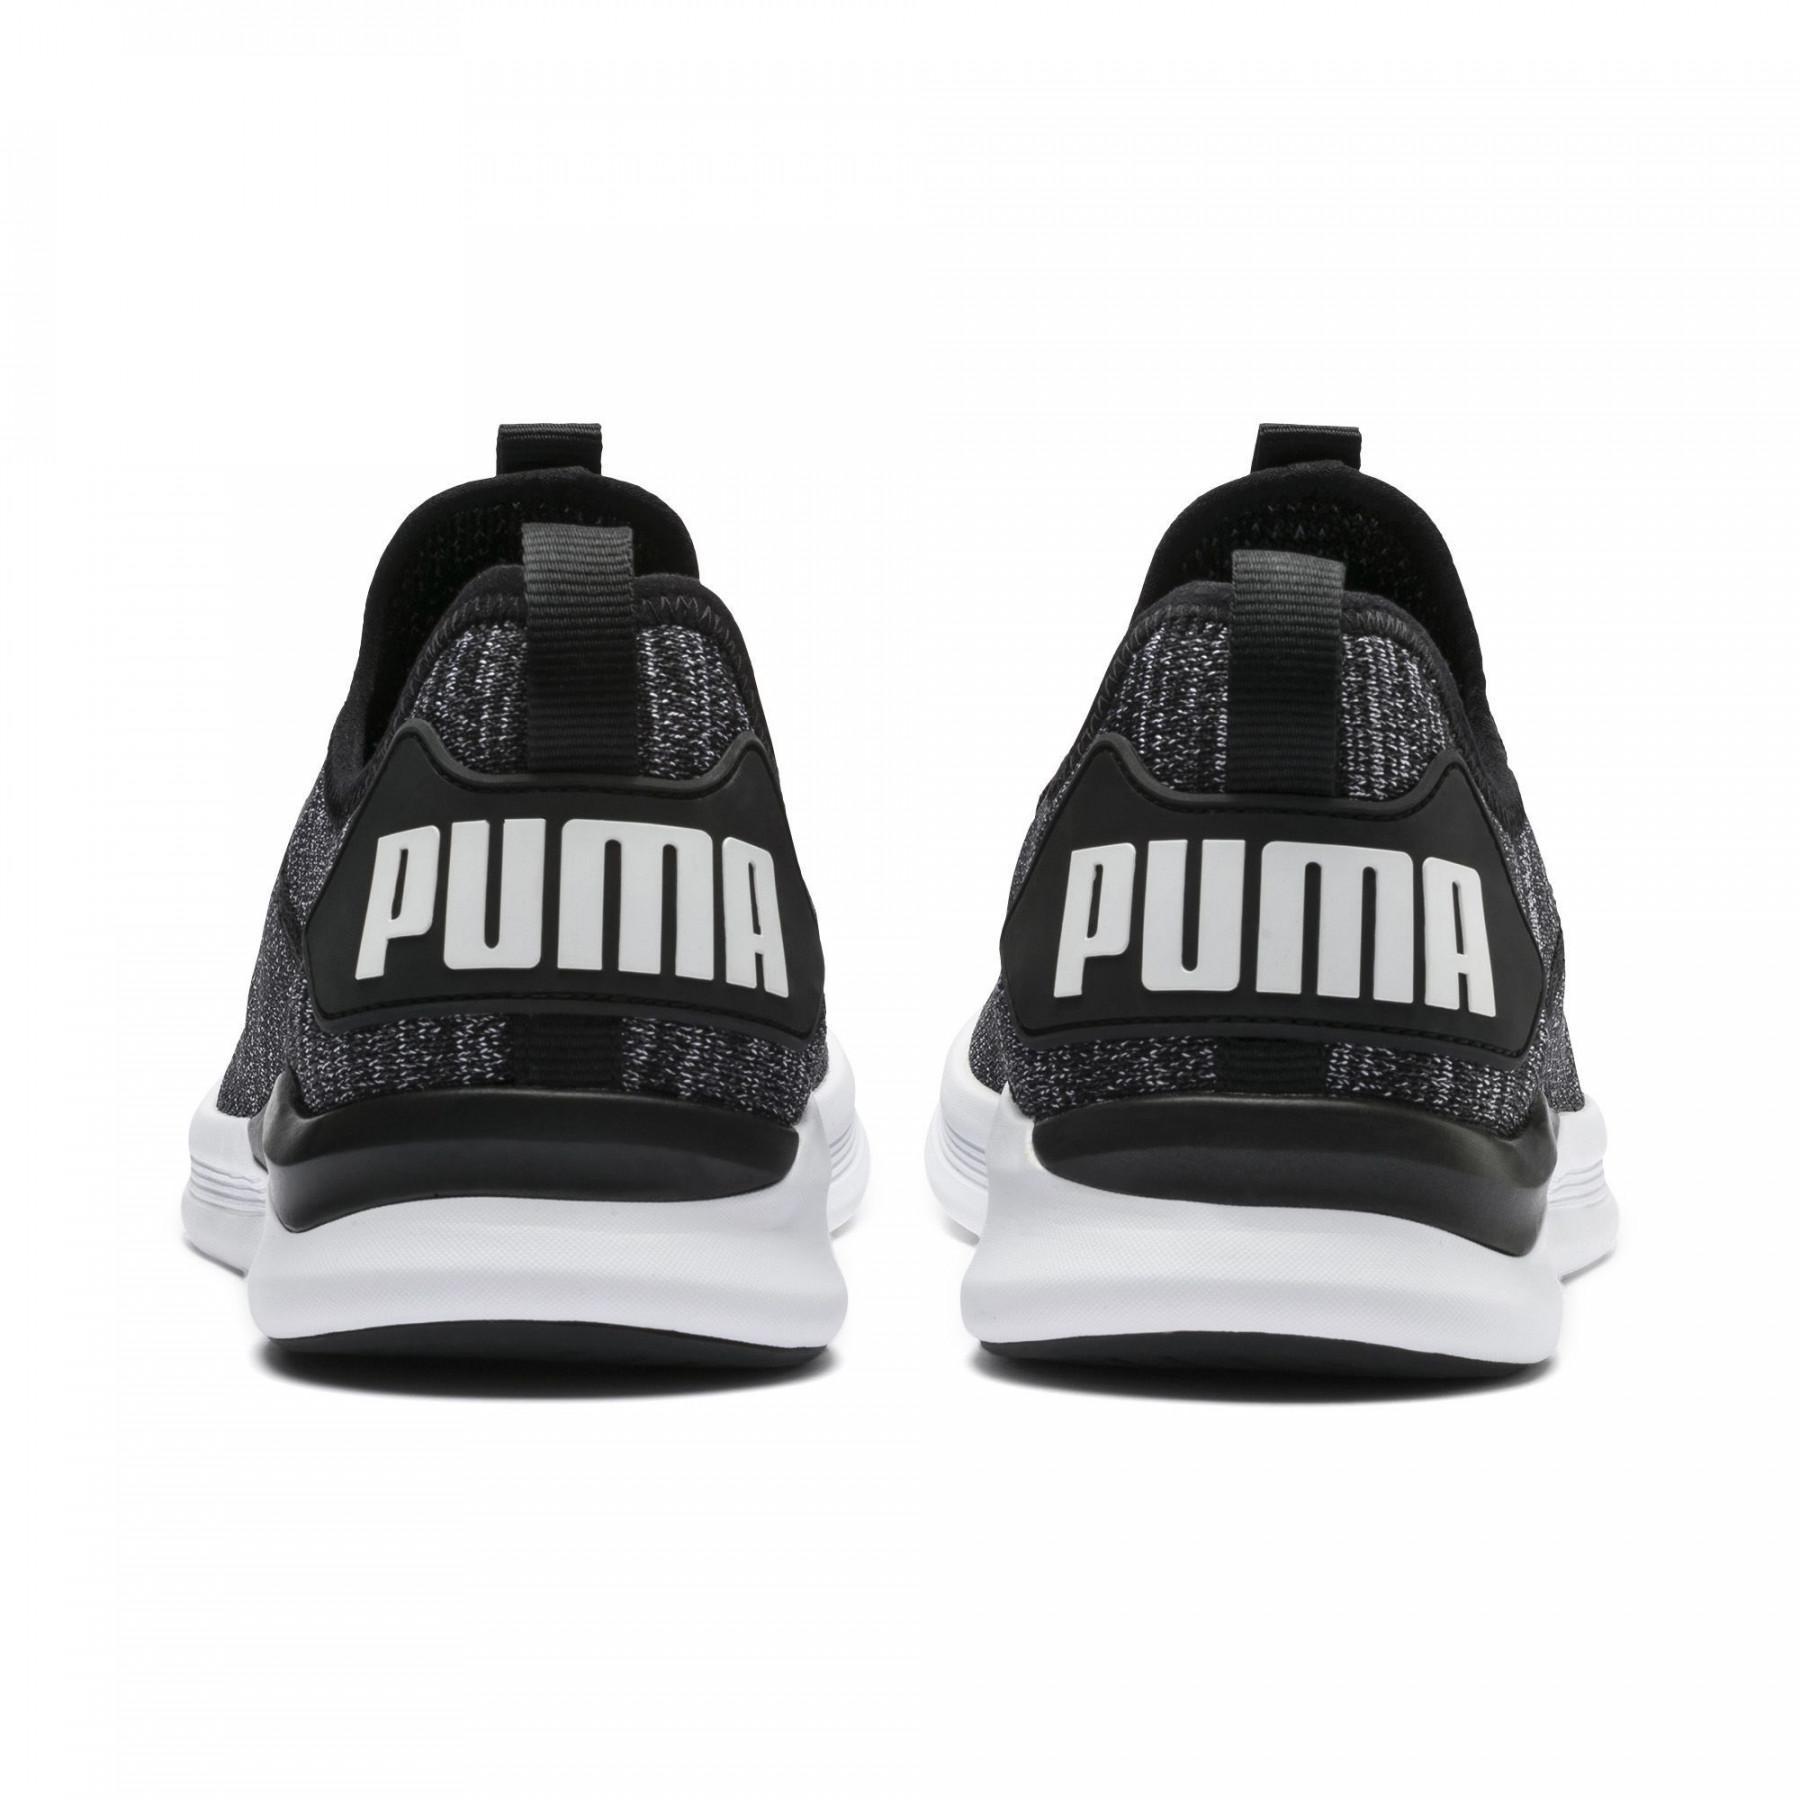 Sapatos Puma Ignite Flash evoKNIT